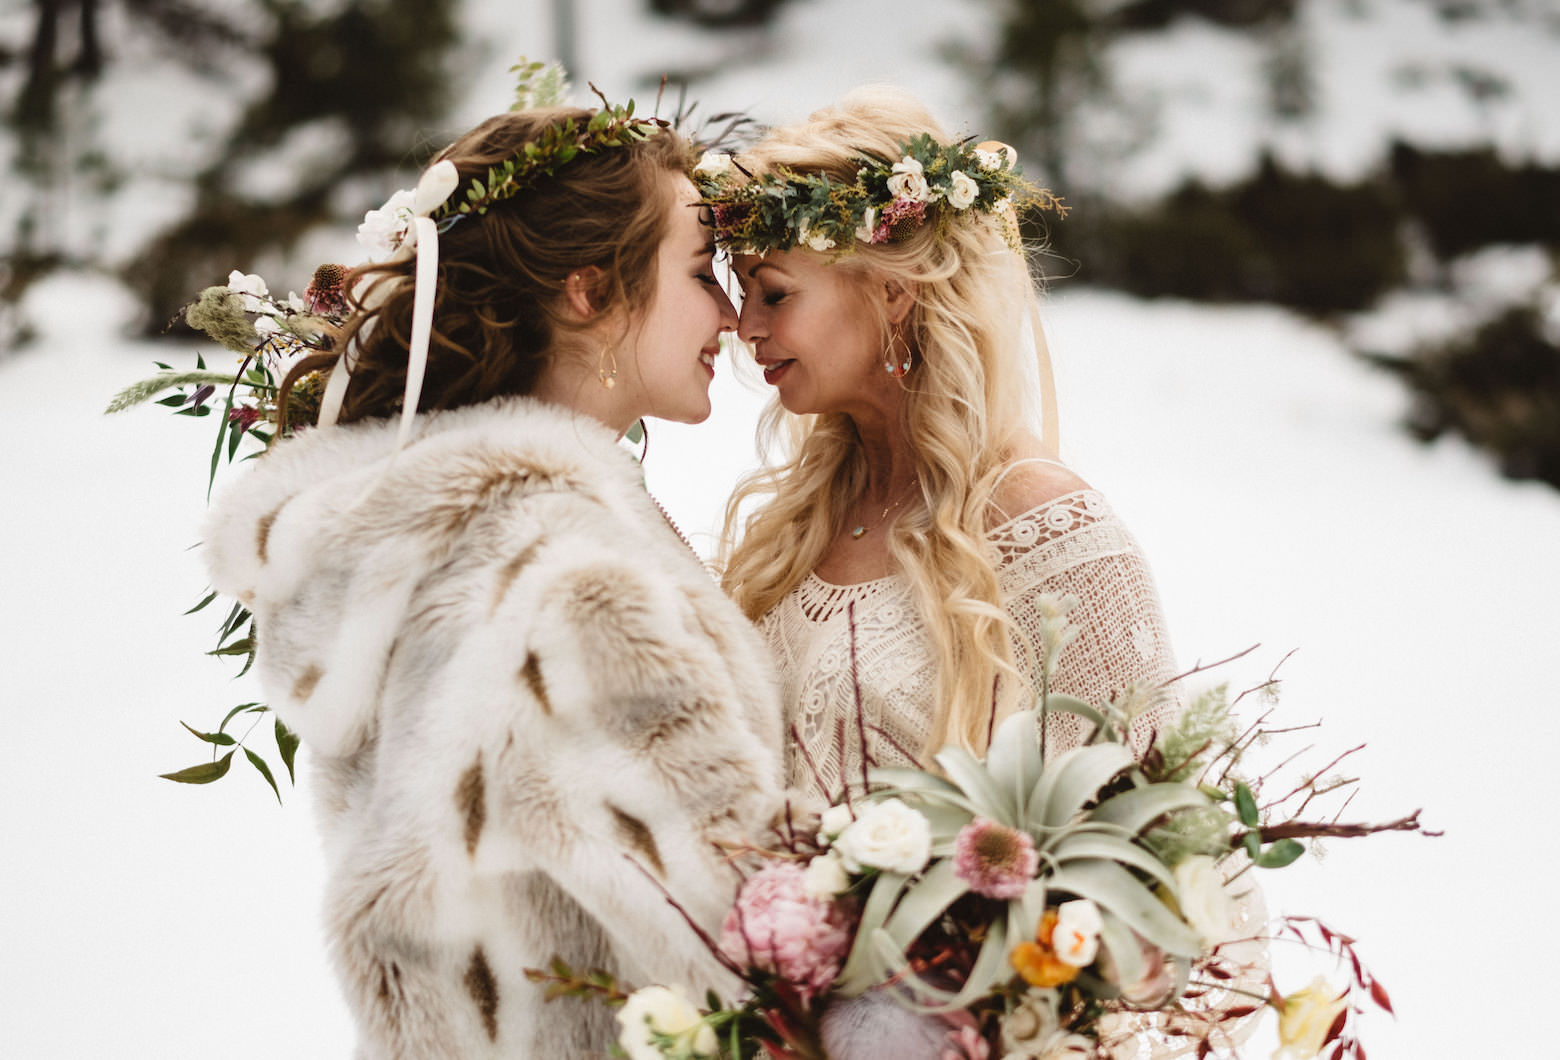 Elegant + Rustic Winter Wedding Inspiration - Elizabeth Anne